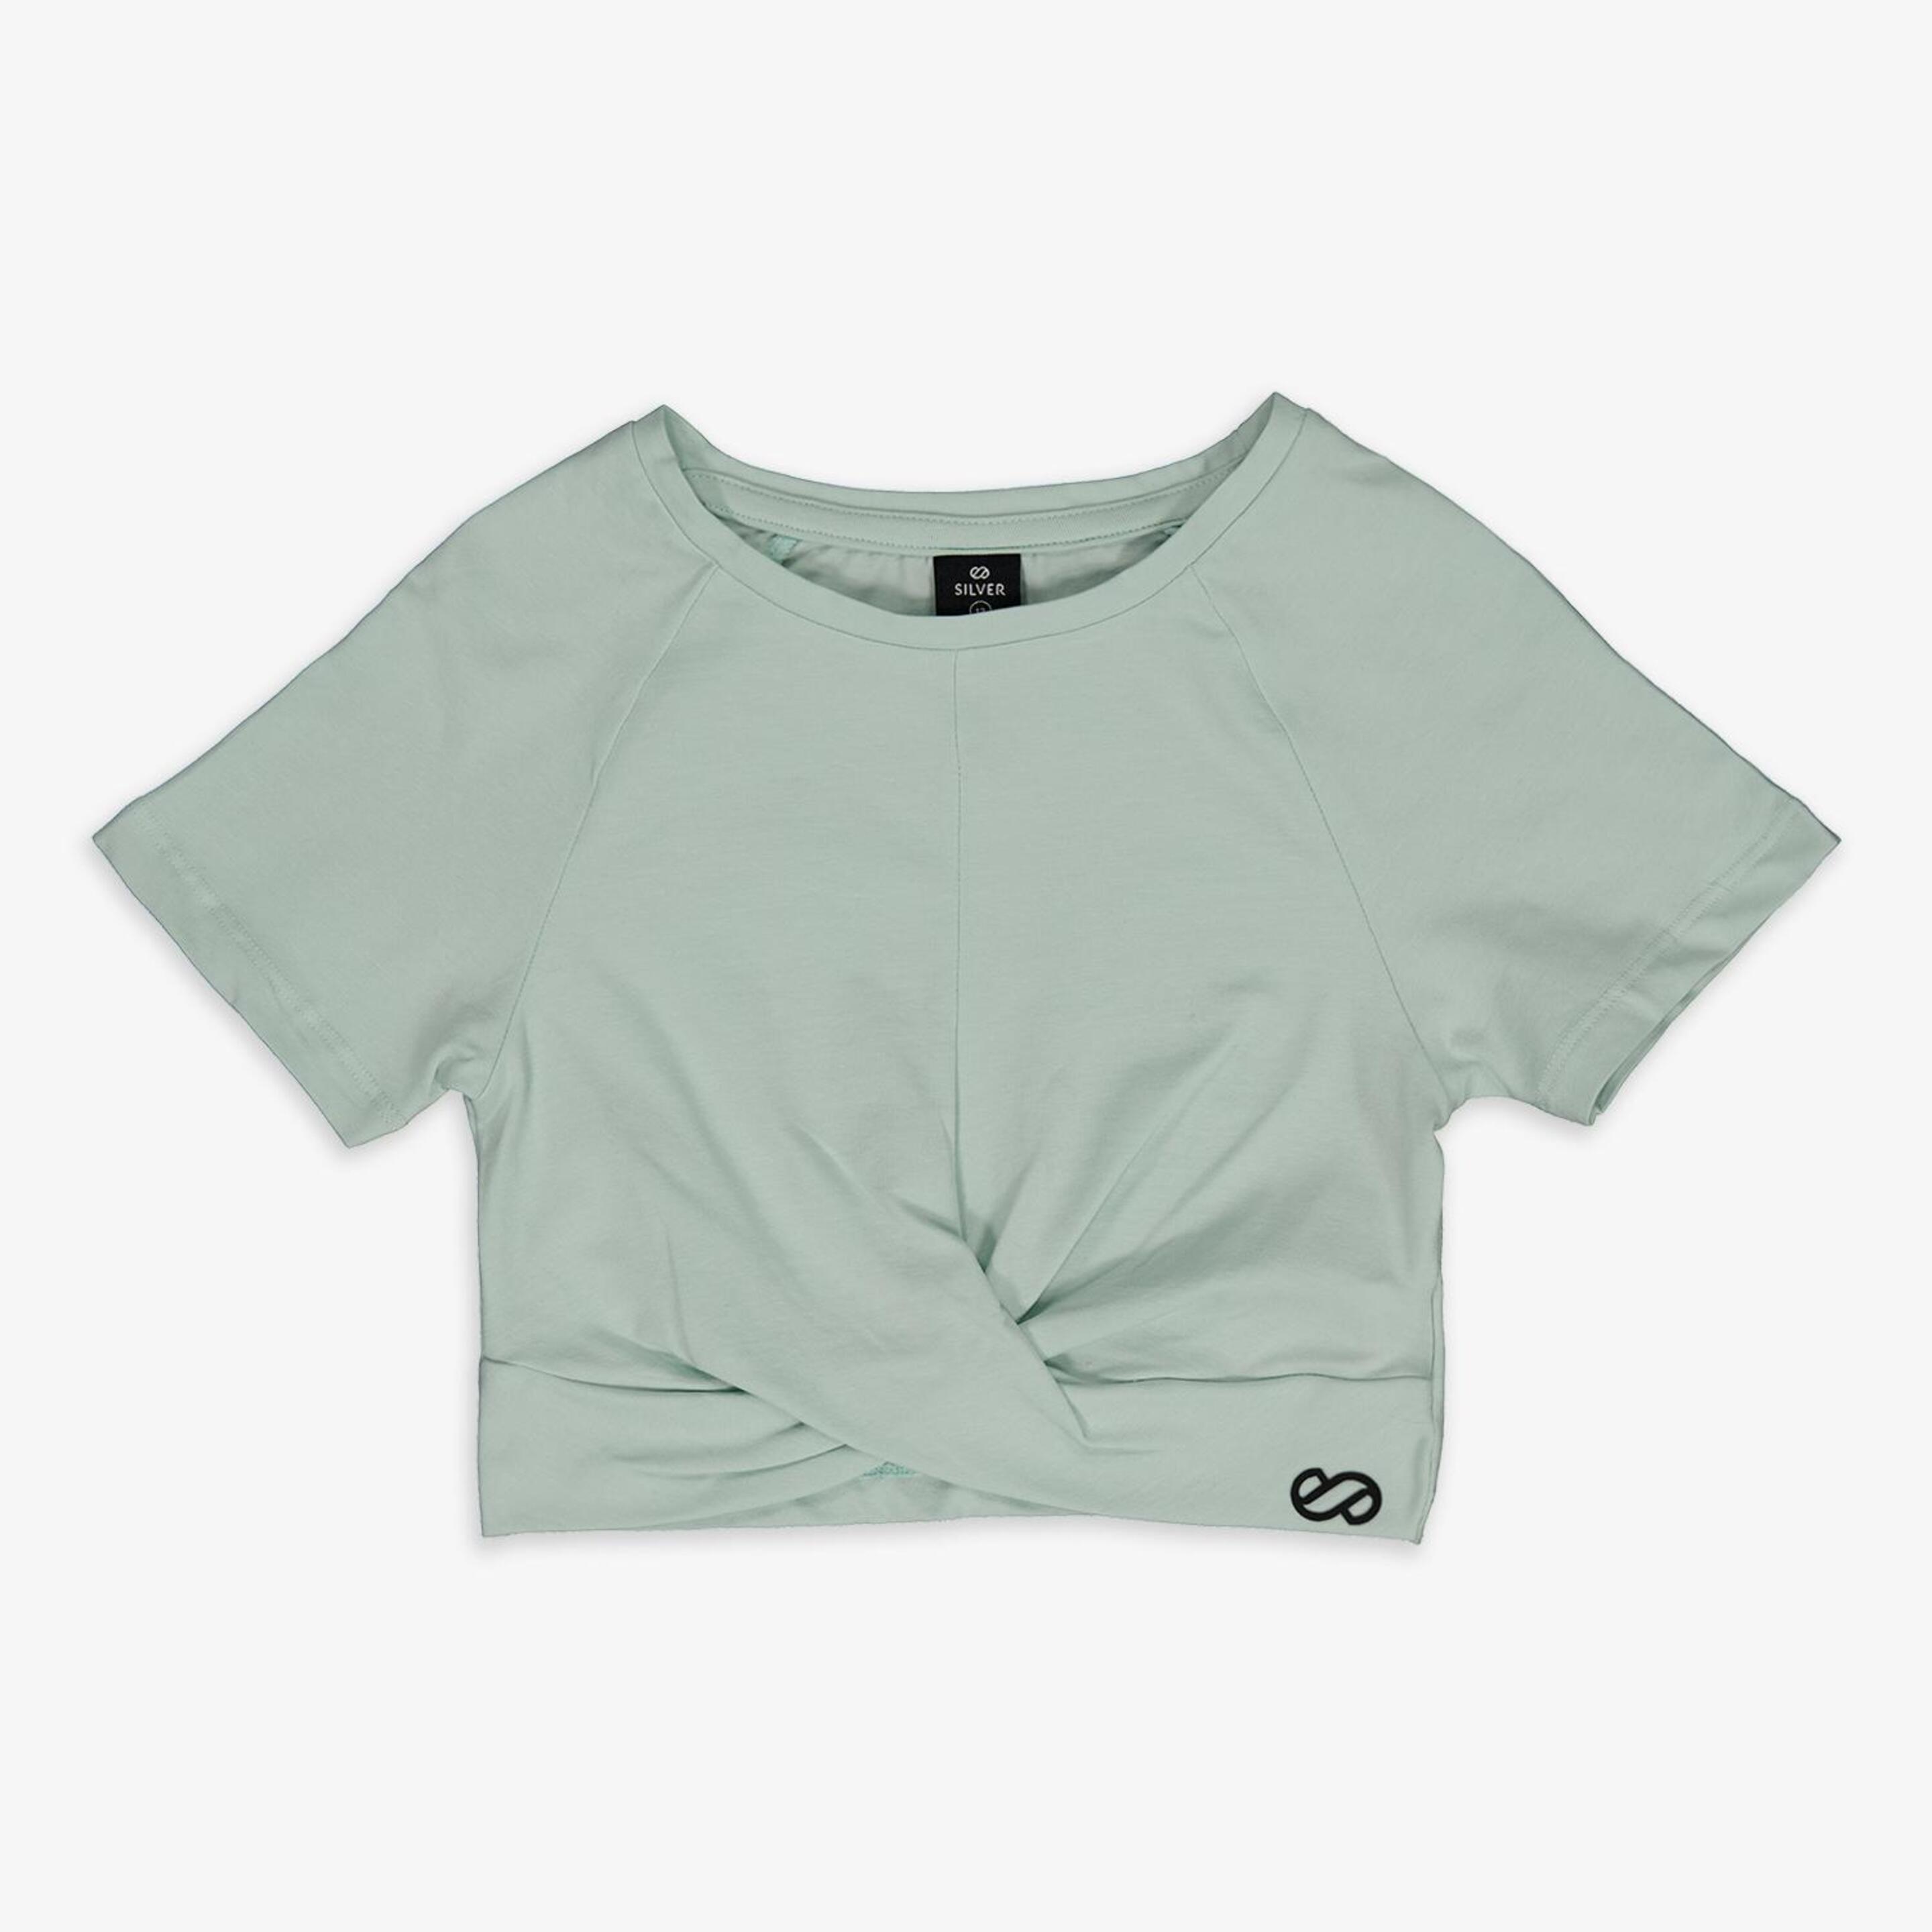 Silver Etnosurf - verde - Camiseta Niña